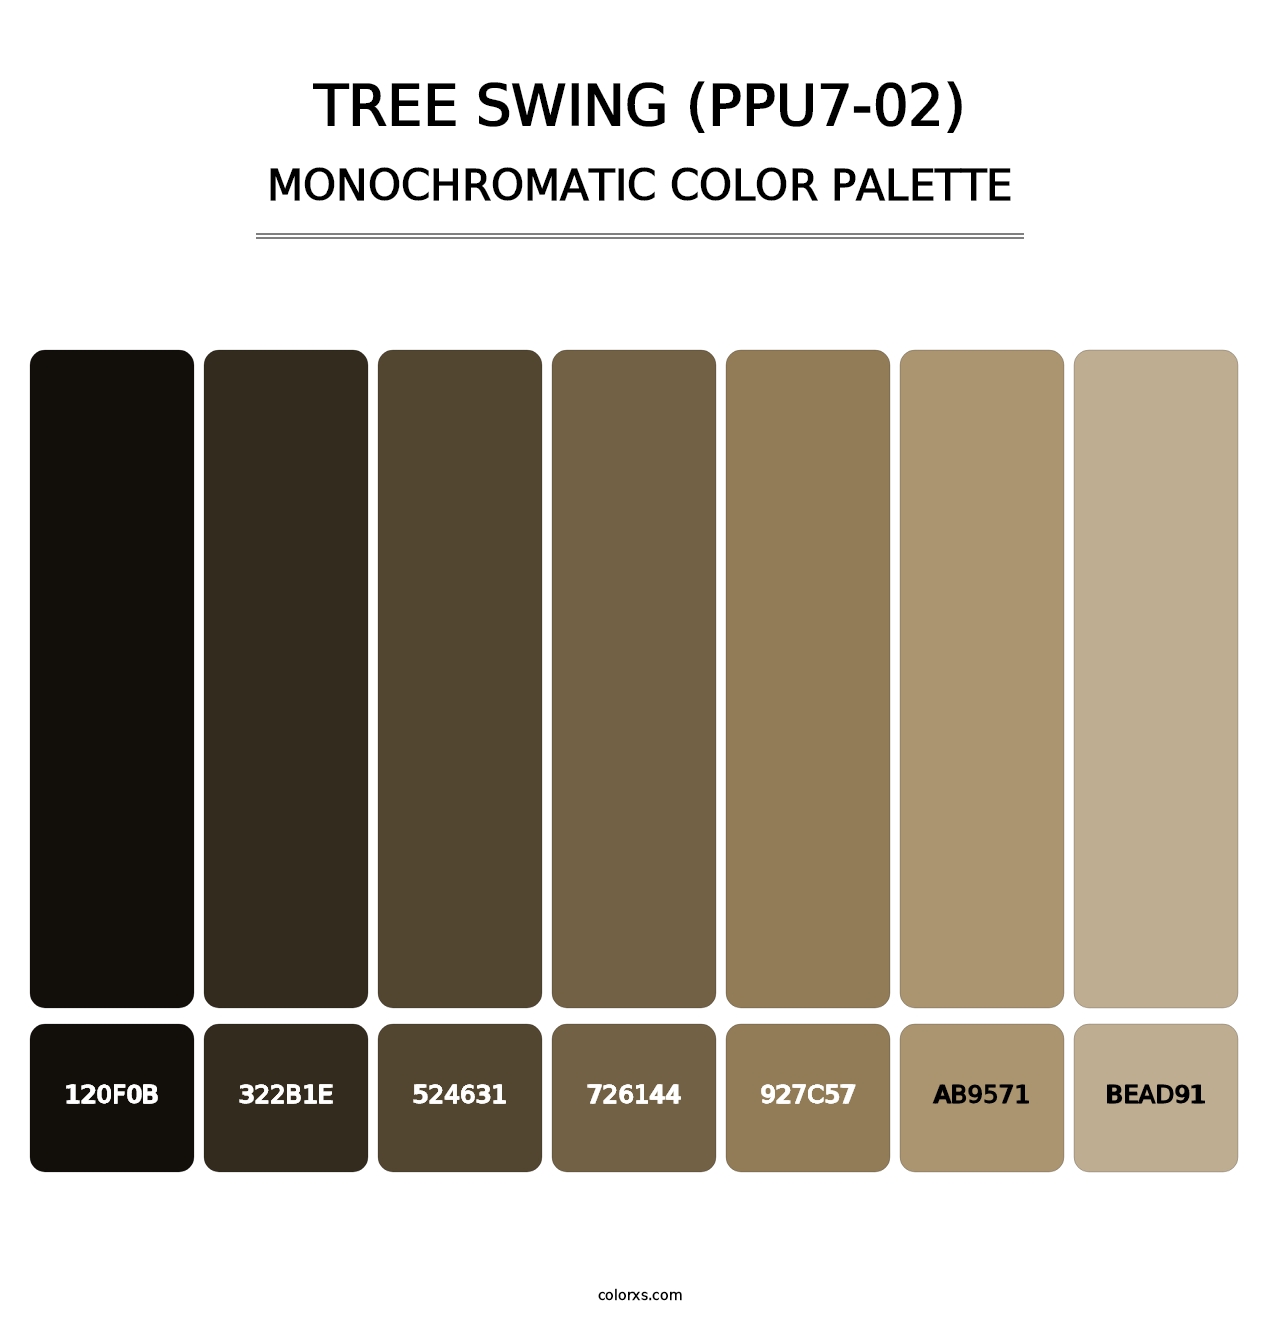 Tree Swing (PPU7-02) - Monochromatic Color Palette